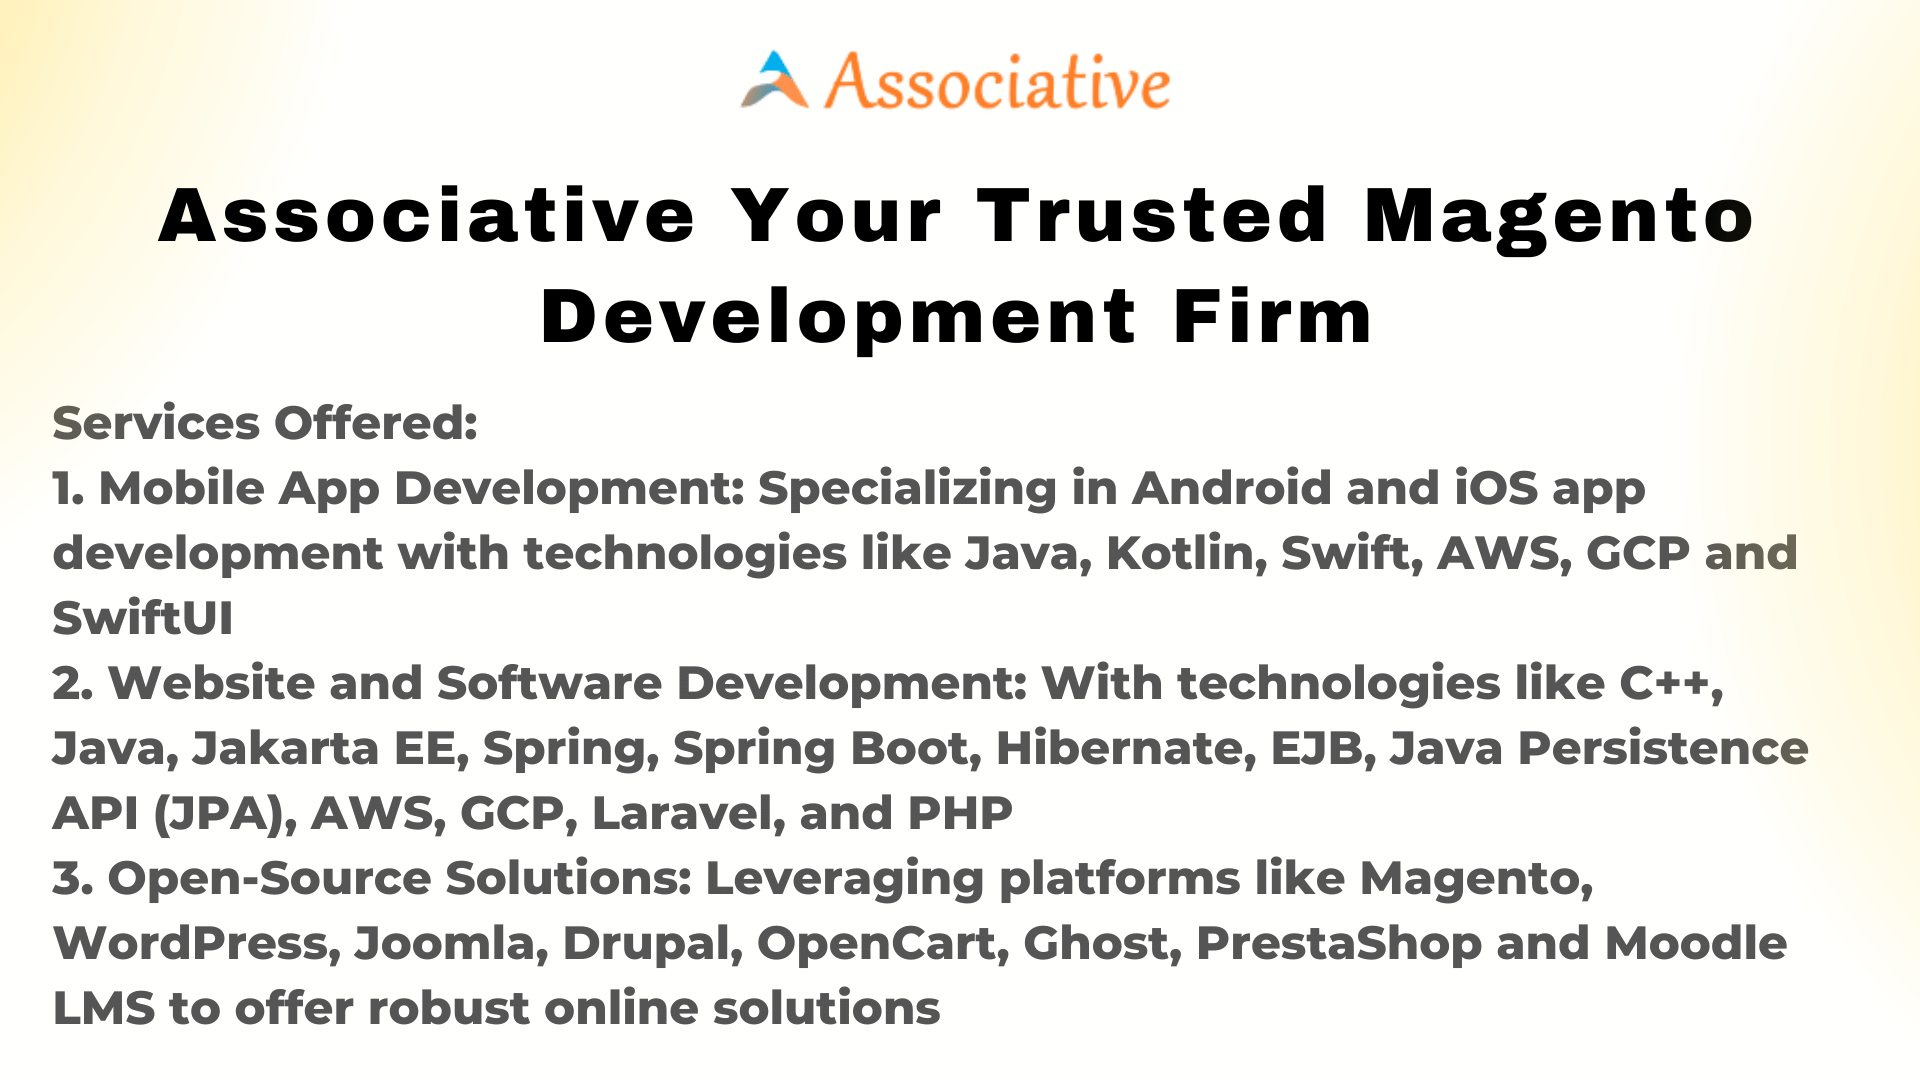 Associative Your Trusted Magento Development Firm